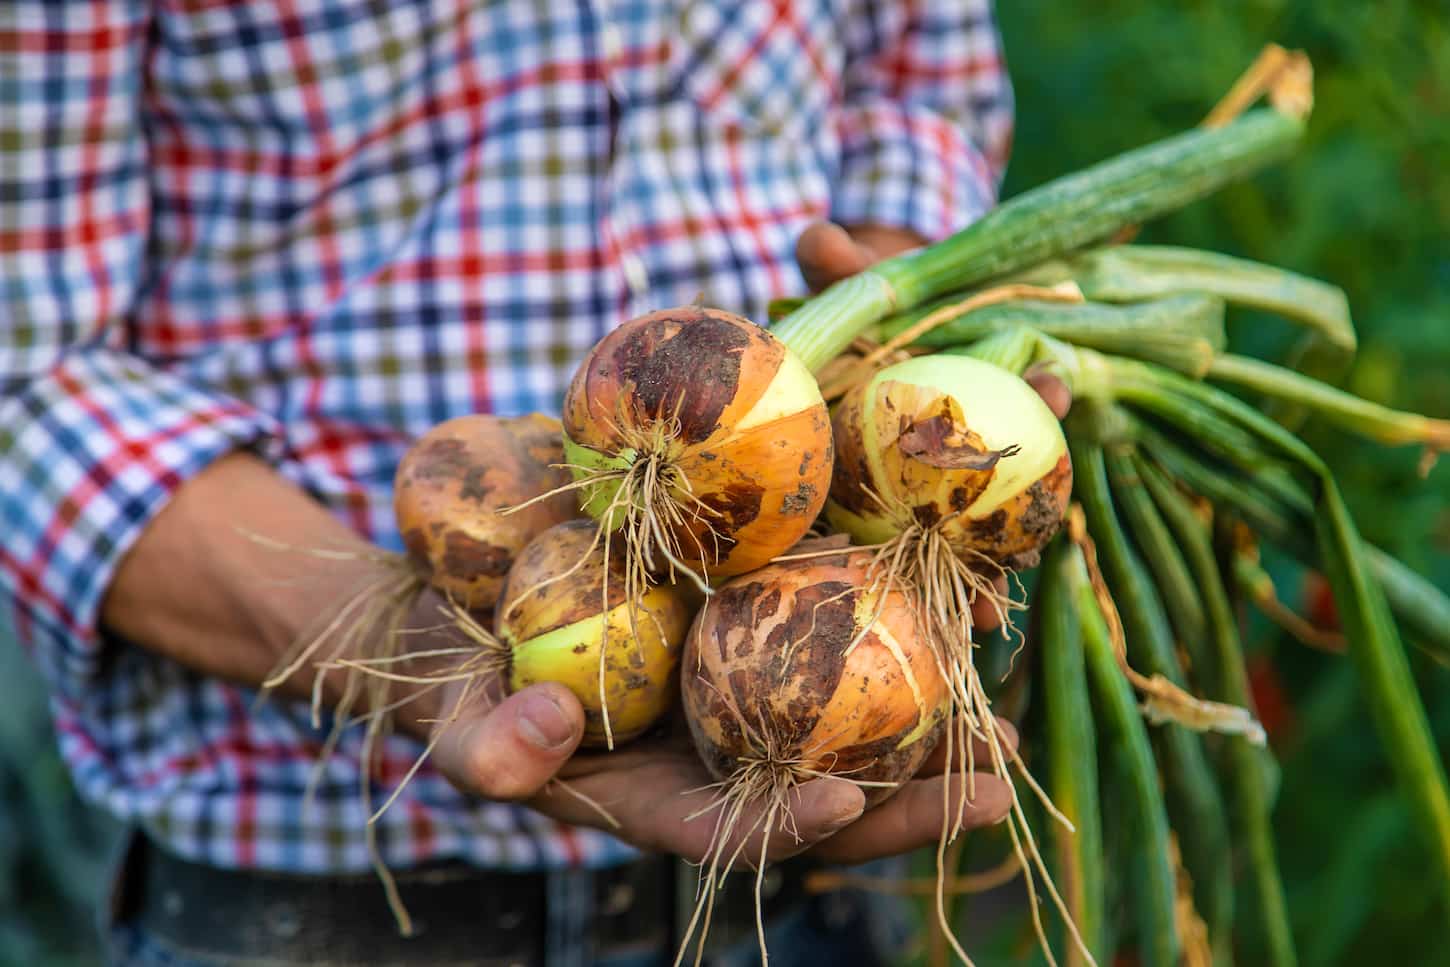 An image of a man farmer holding an onion in the garden.